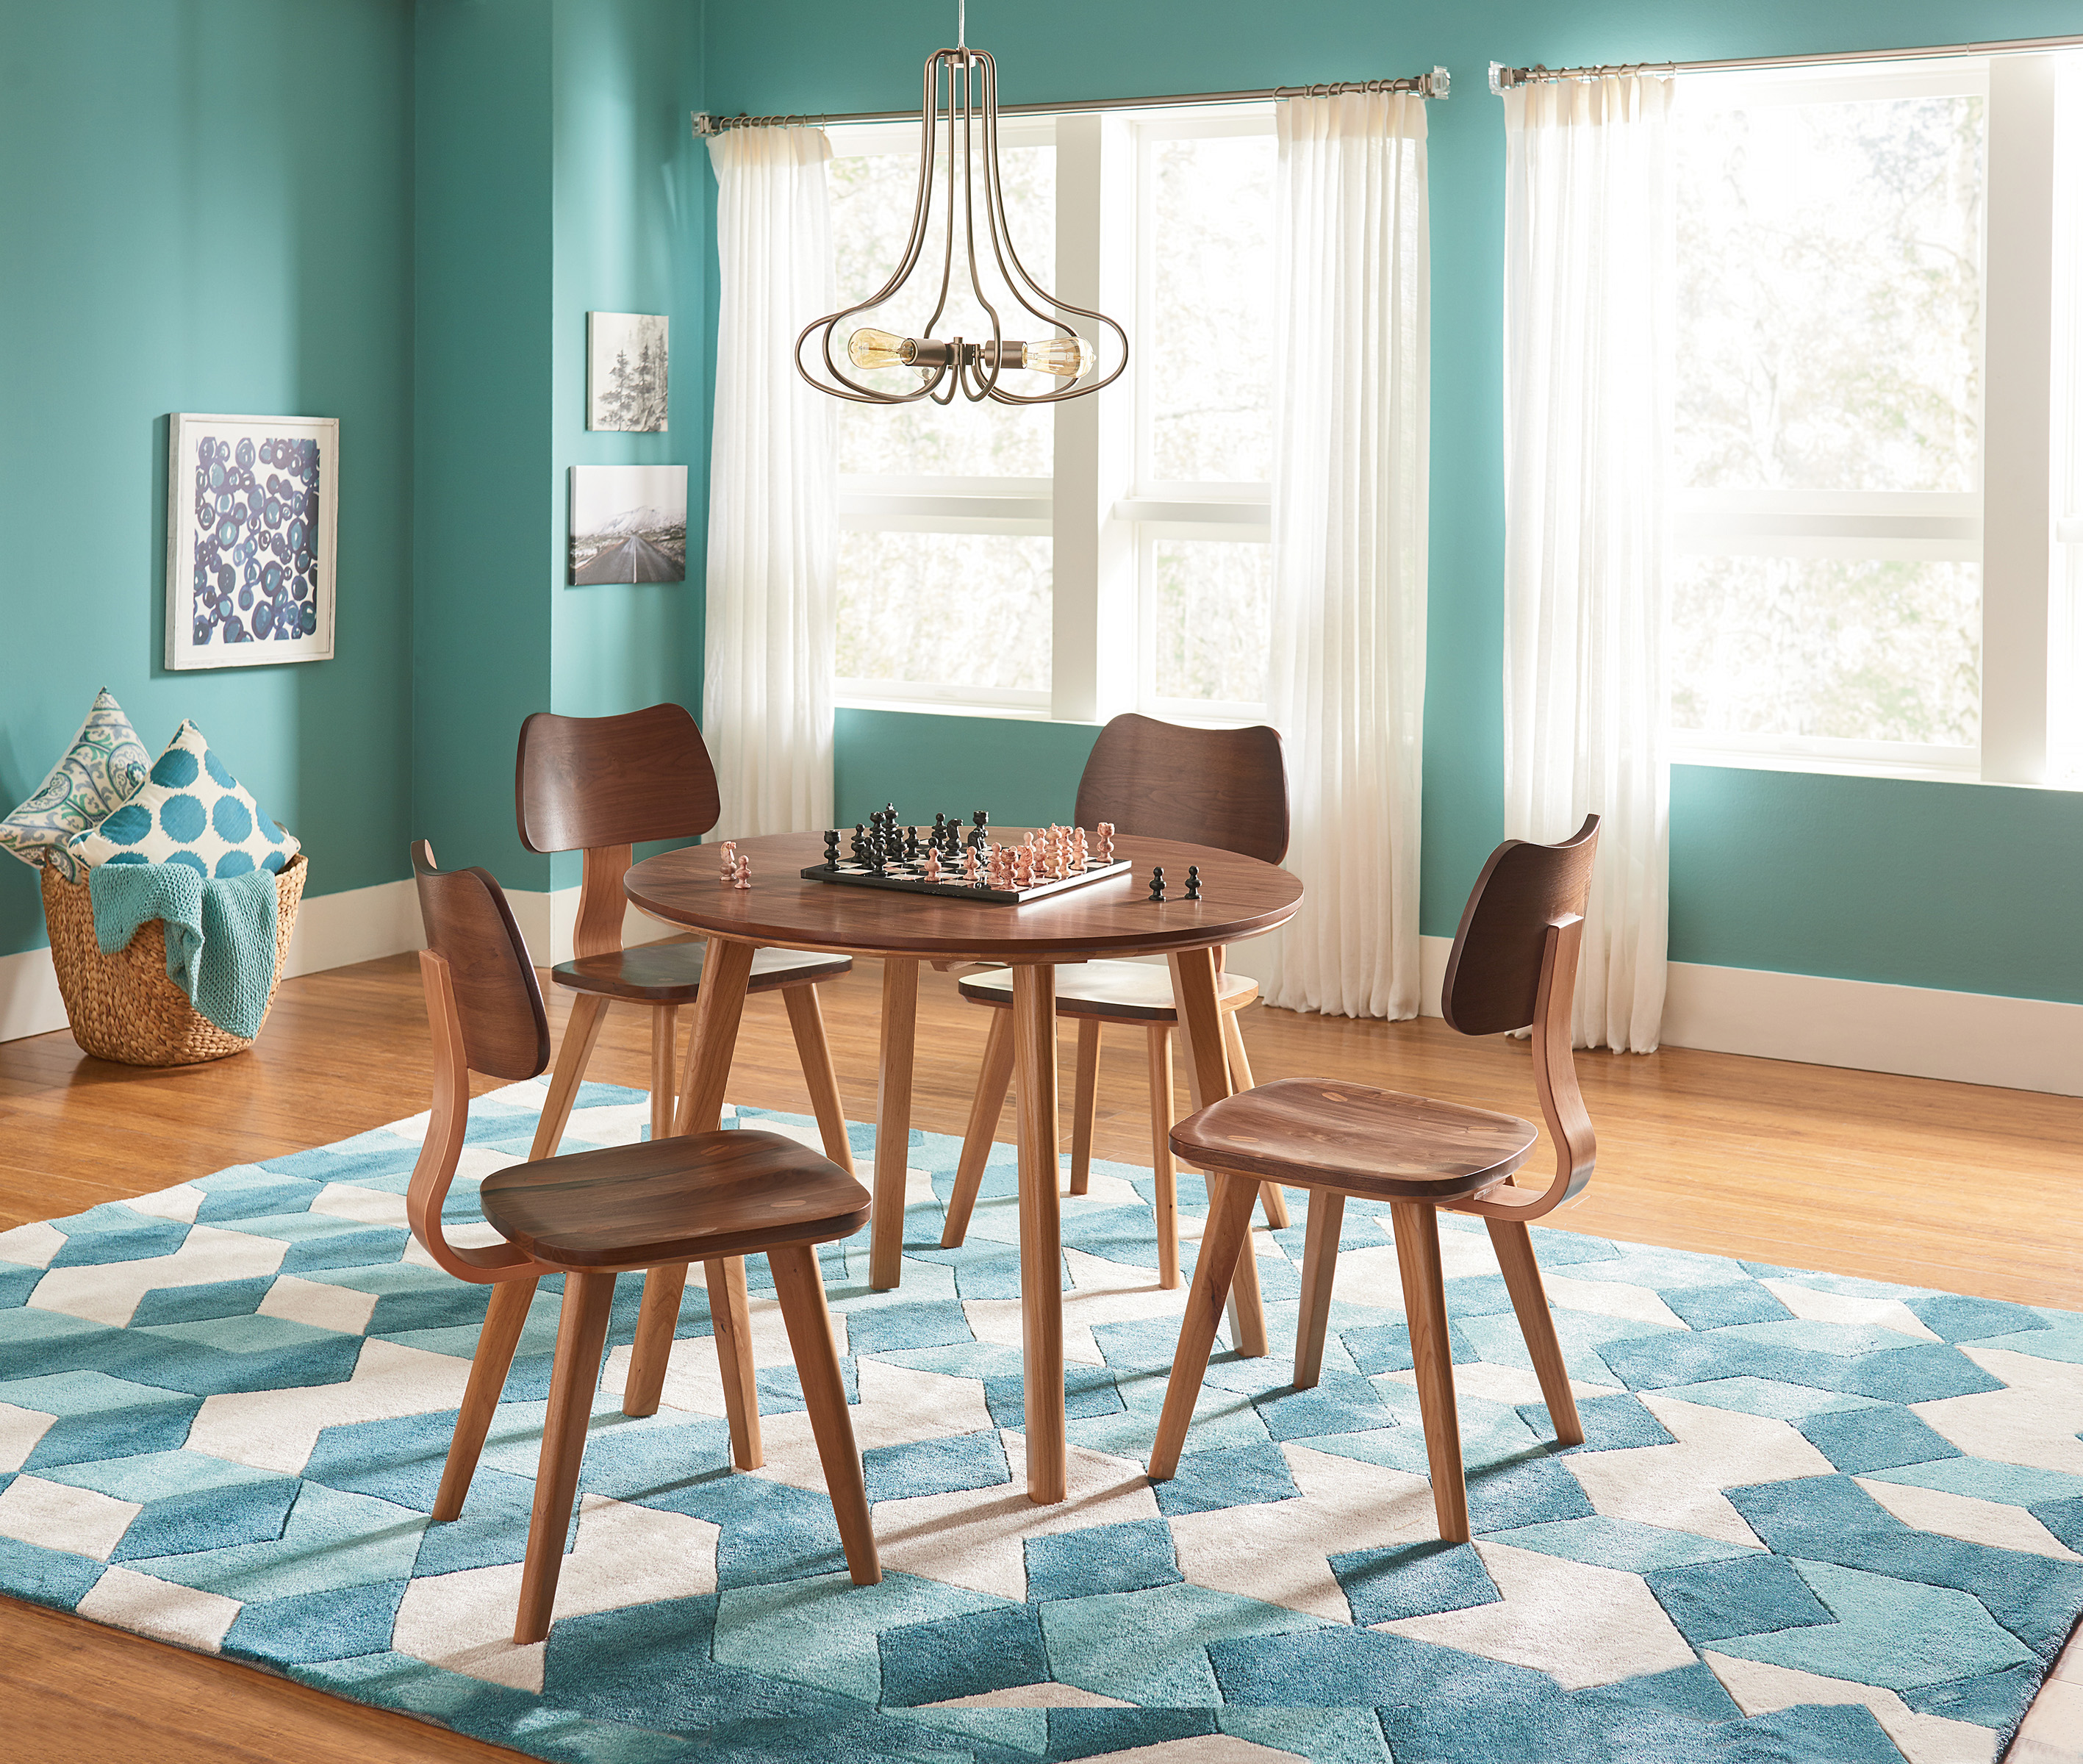 Addi - Whittier Wood Furniture